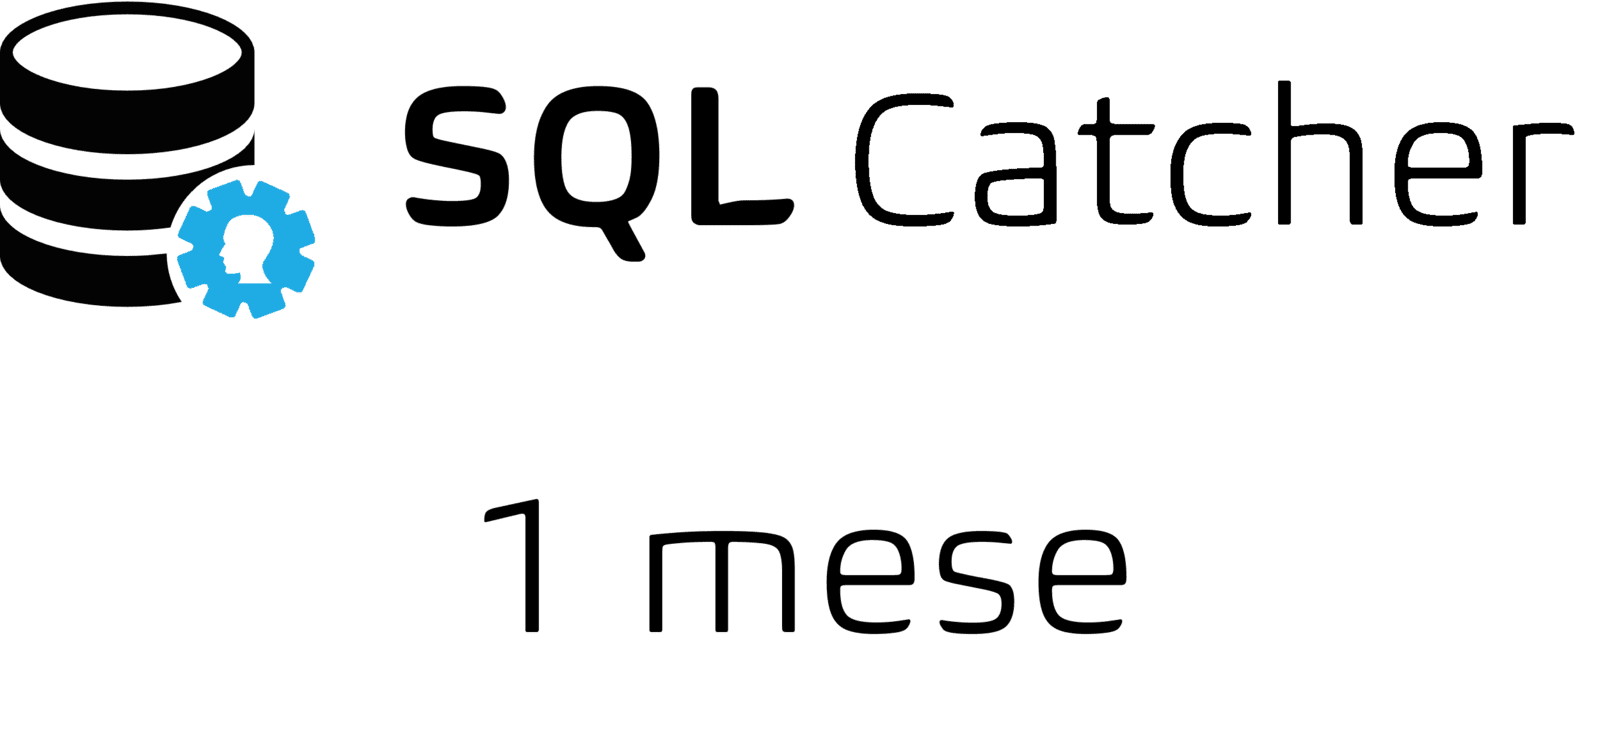 SQL Catcher 1 mese